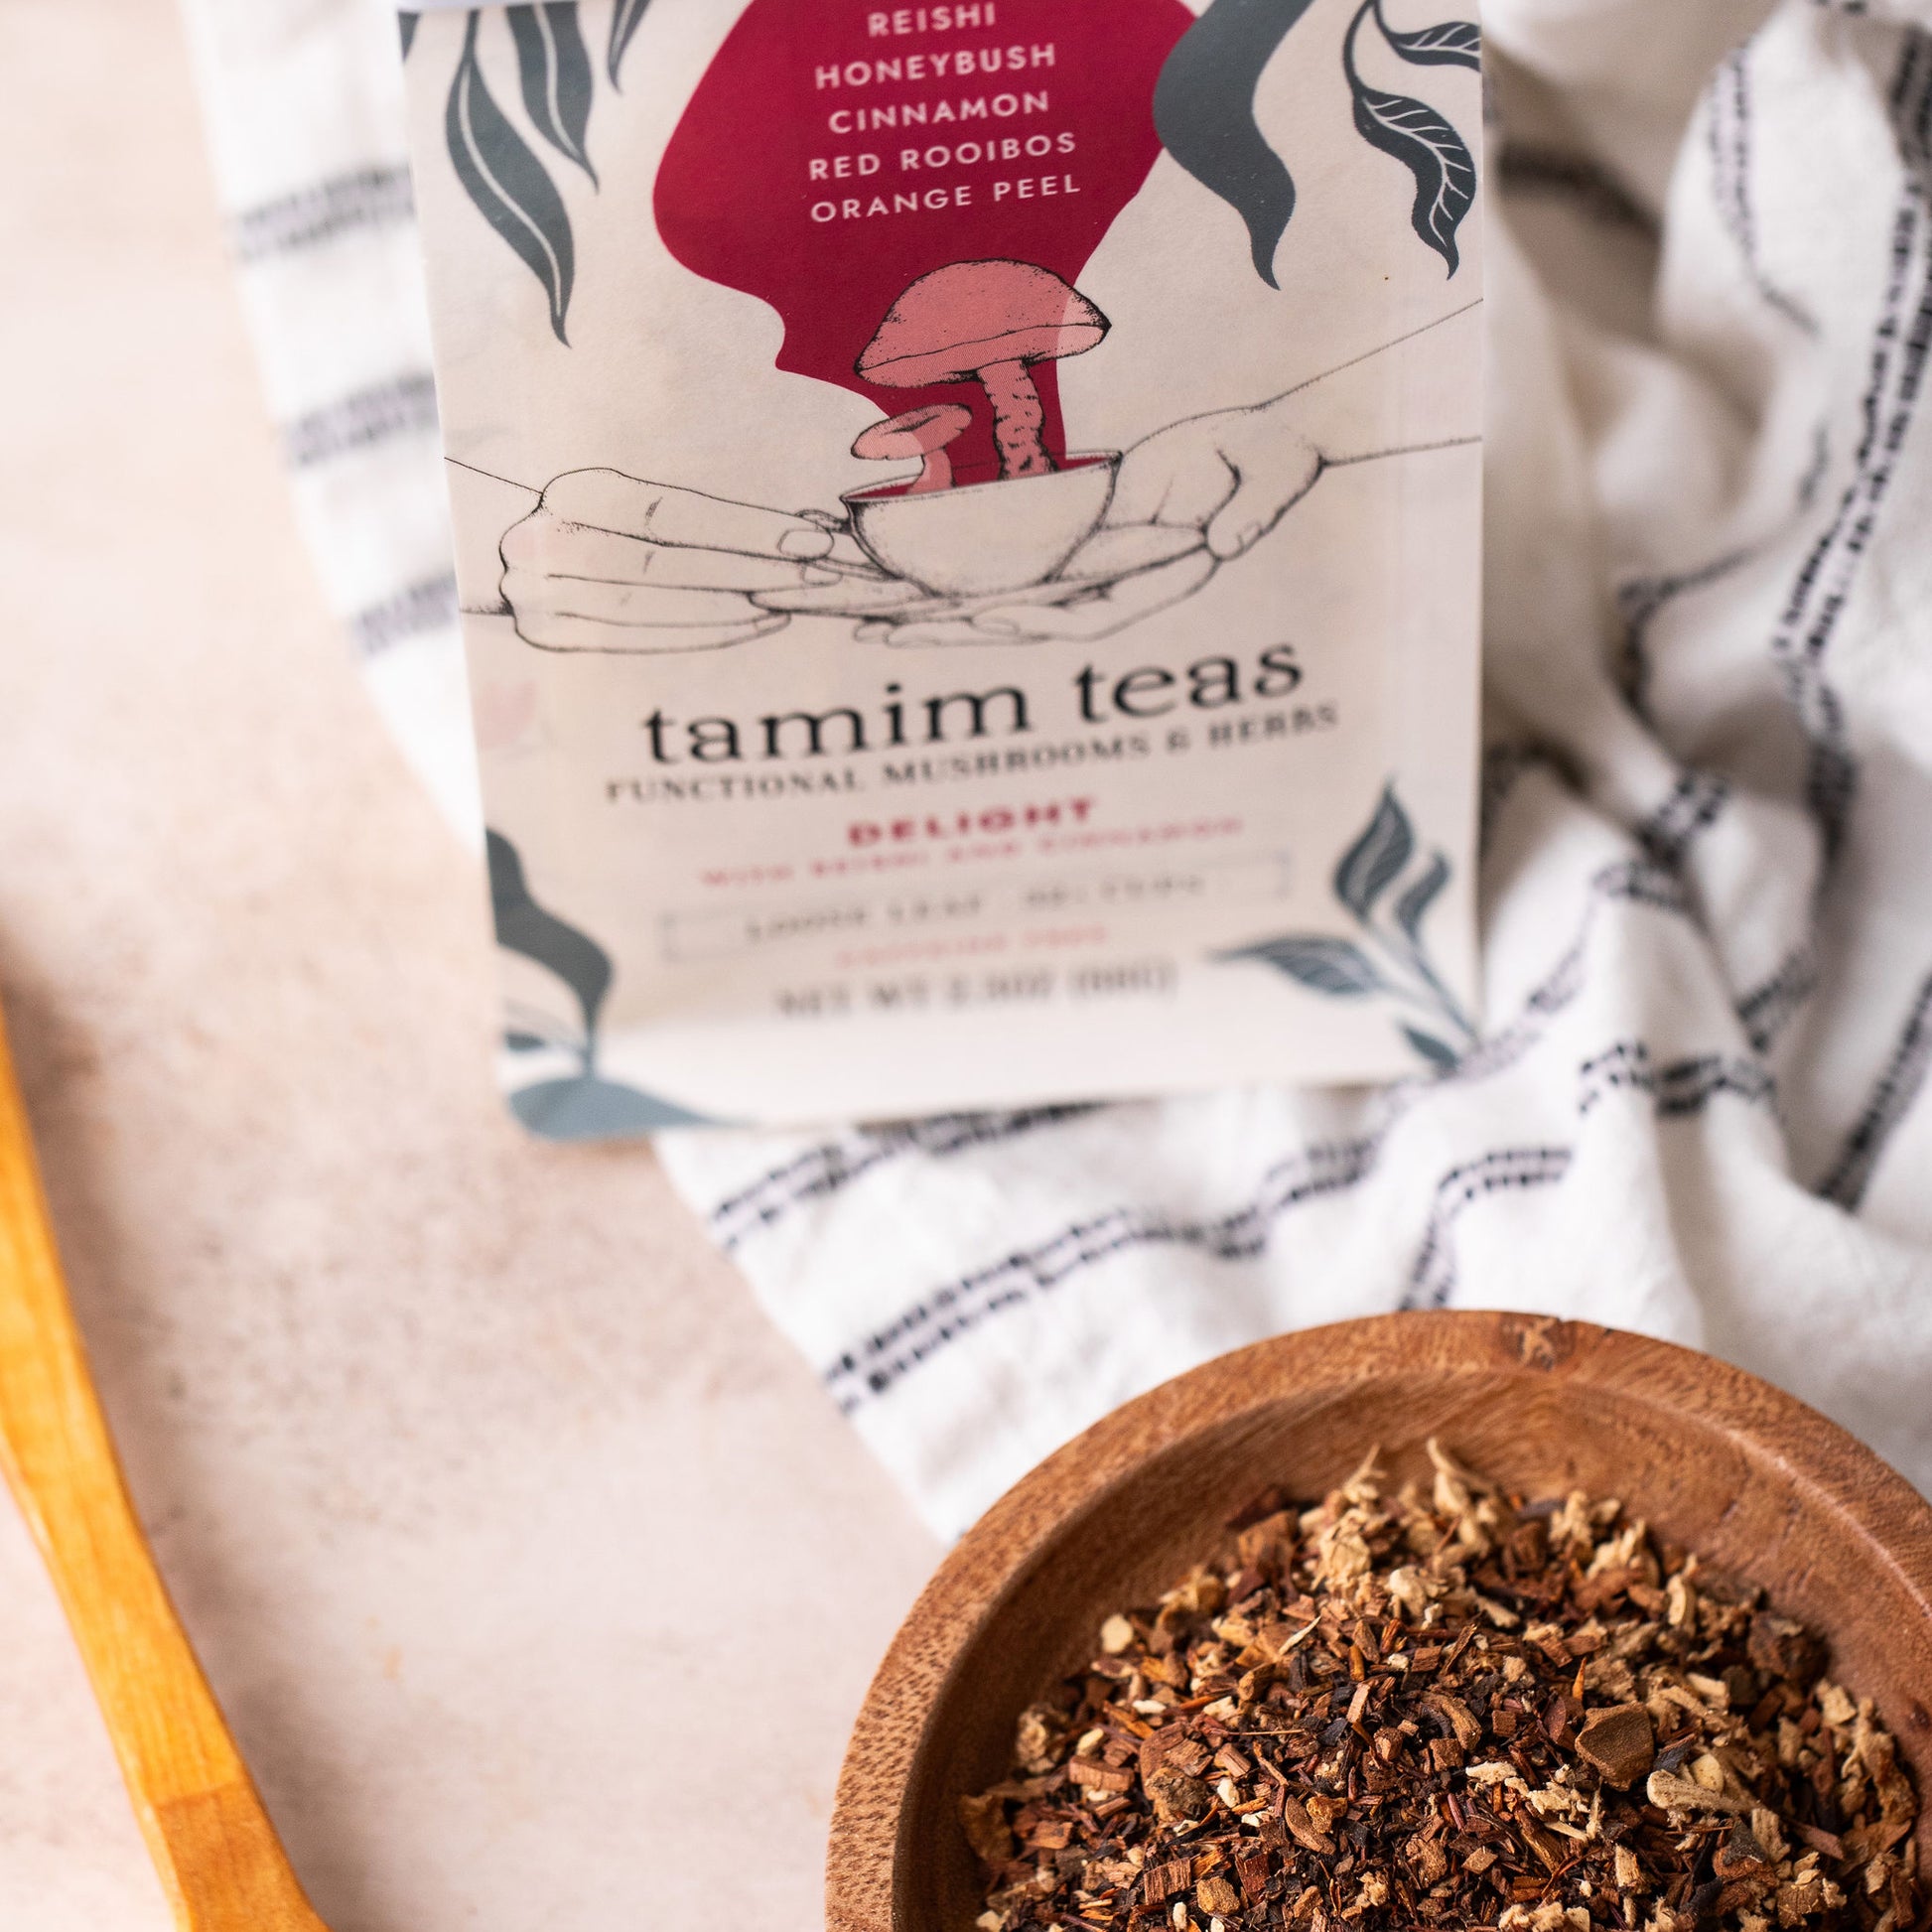 Delight | Reishi Mushroom Tea with Cinnamon and Honeybush